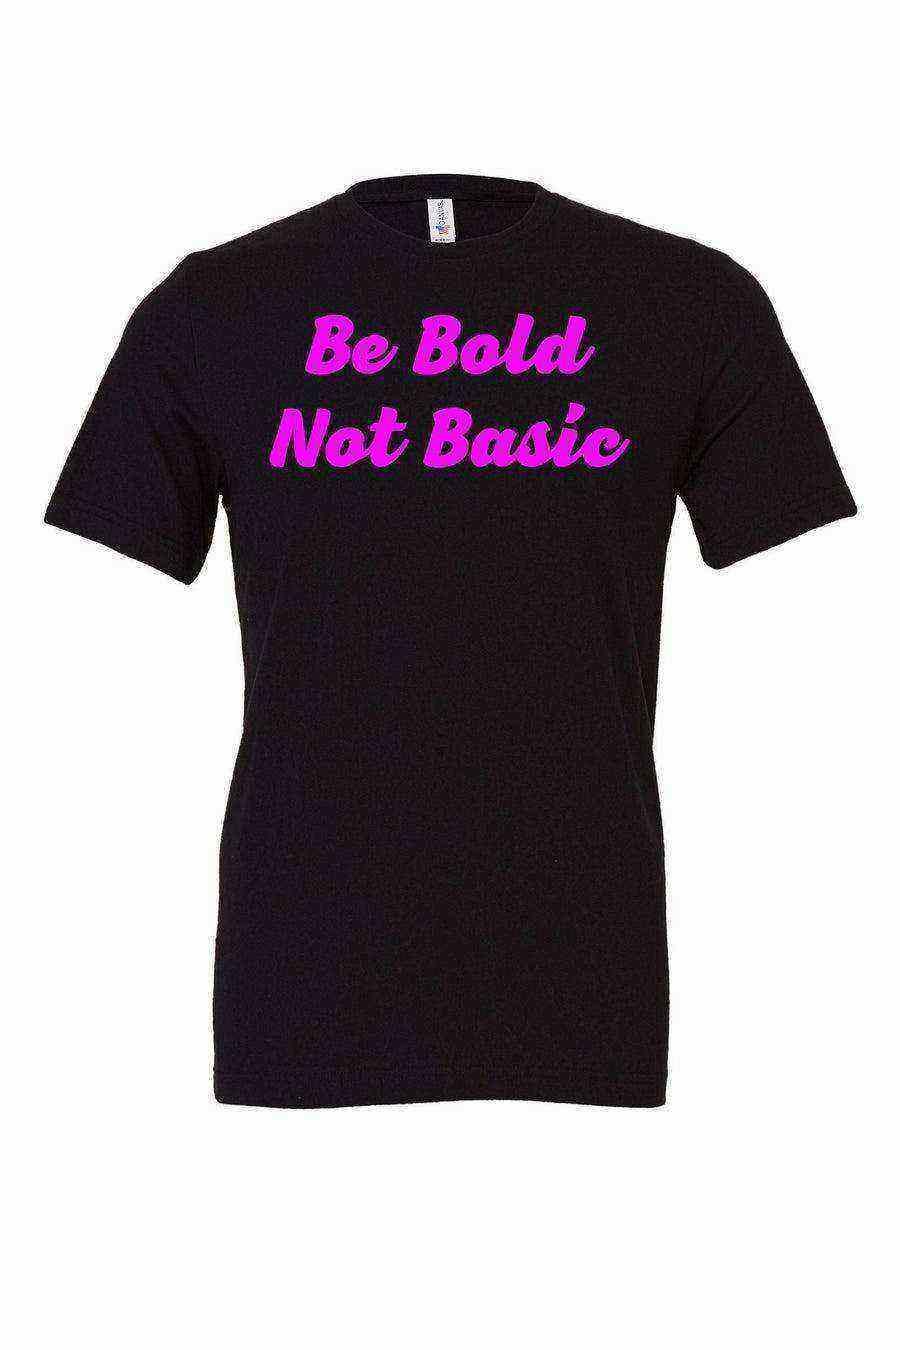 Be Bold Not Basic Shirt - Dylan's Tees